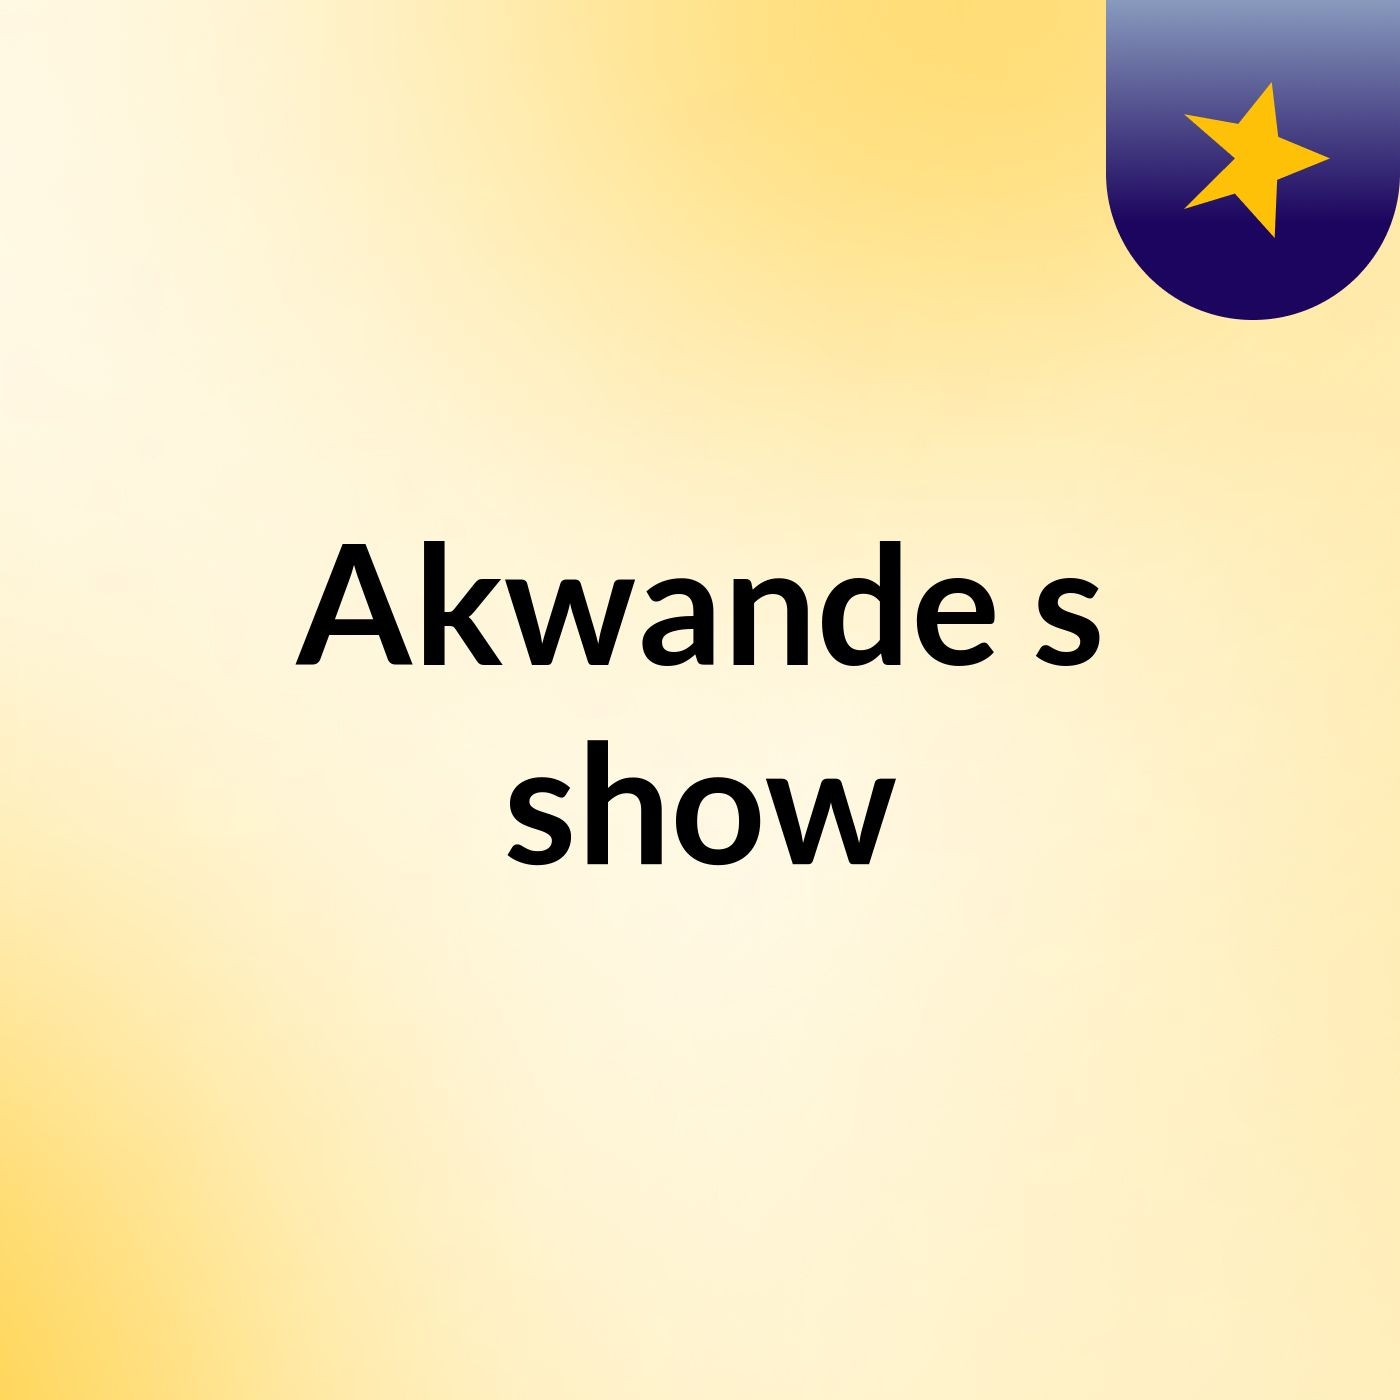 Akwande's show